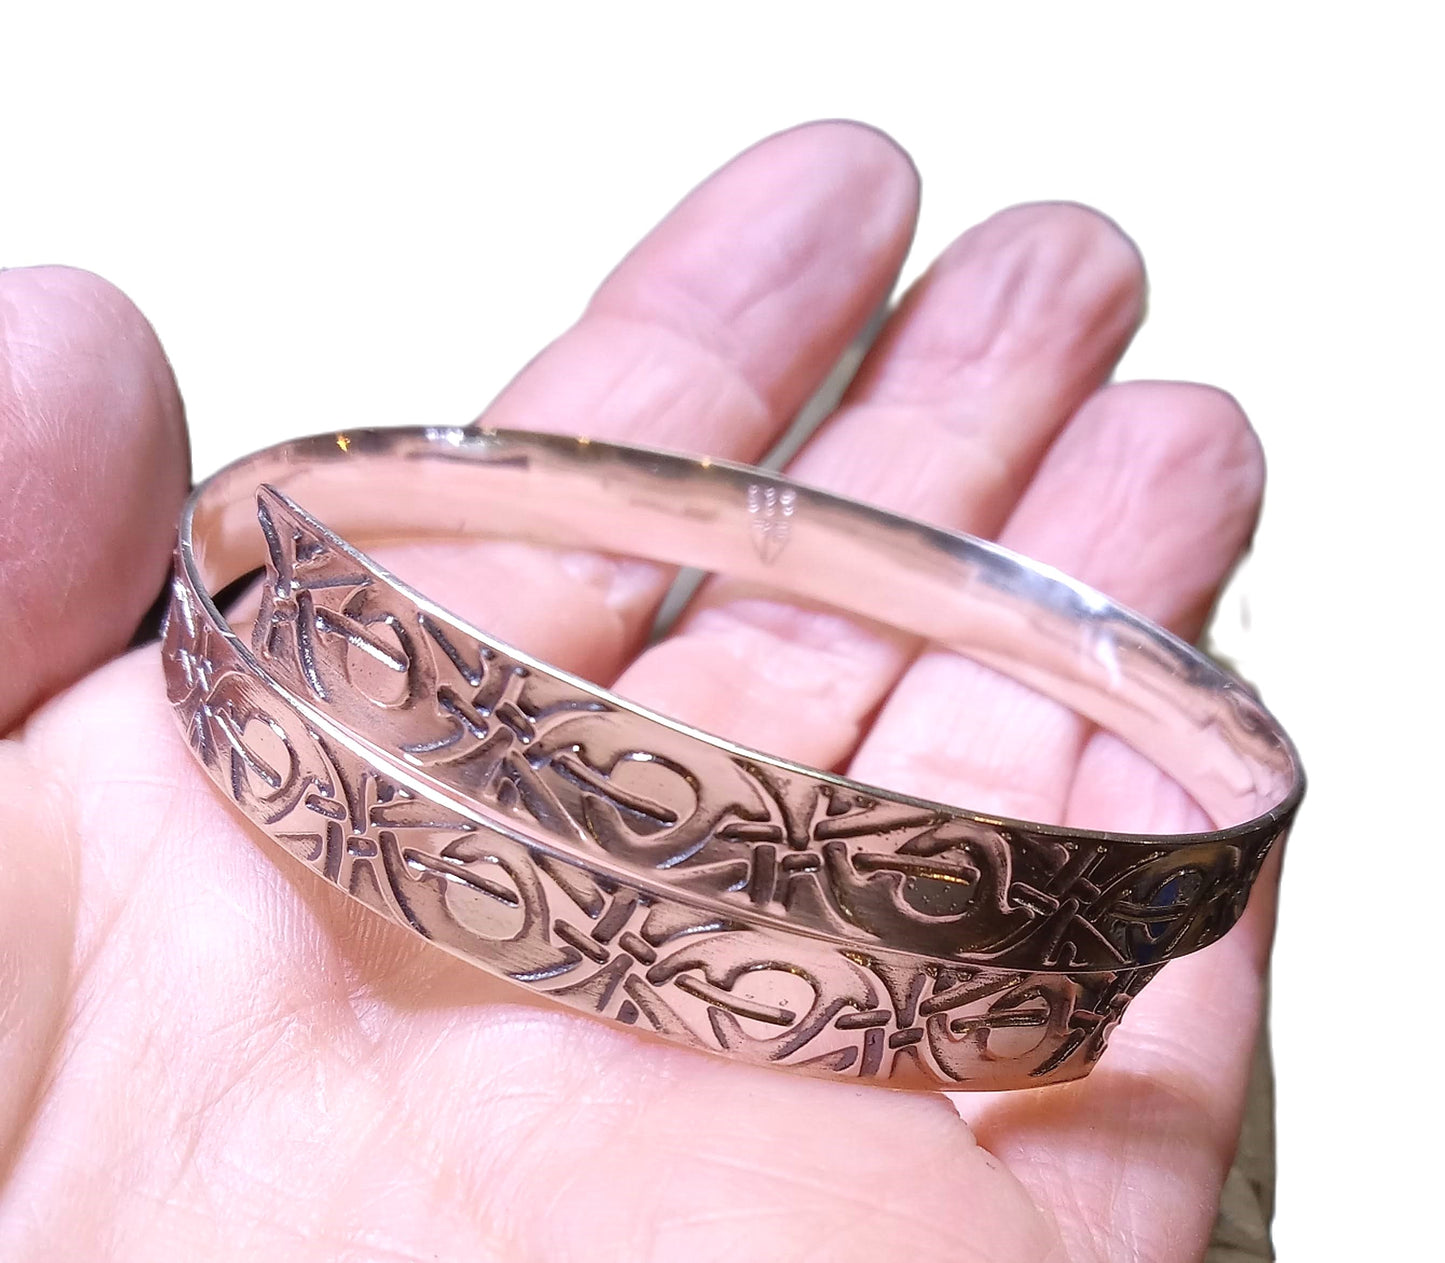 Sterling Silver Bracelet 92.5 etched pattern of Endless XOXO Hugs & Kisses anticlastic handformed wrap bracelet adjustable sizing GemRapture Jewellery handmade artisan jewelry Canada